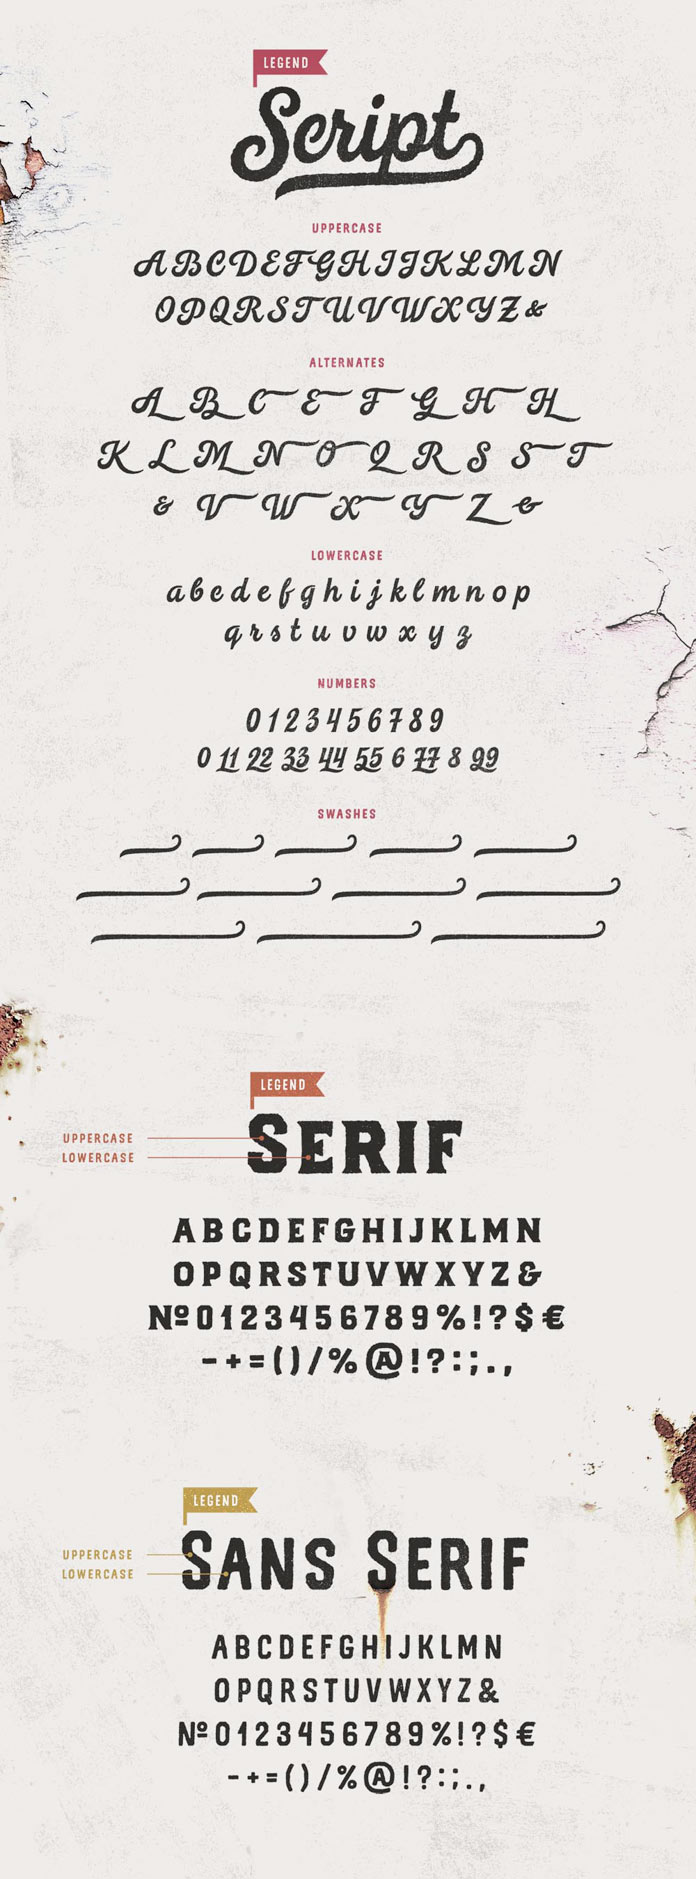 Script, Serif, Sans Serif fonts.